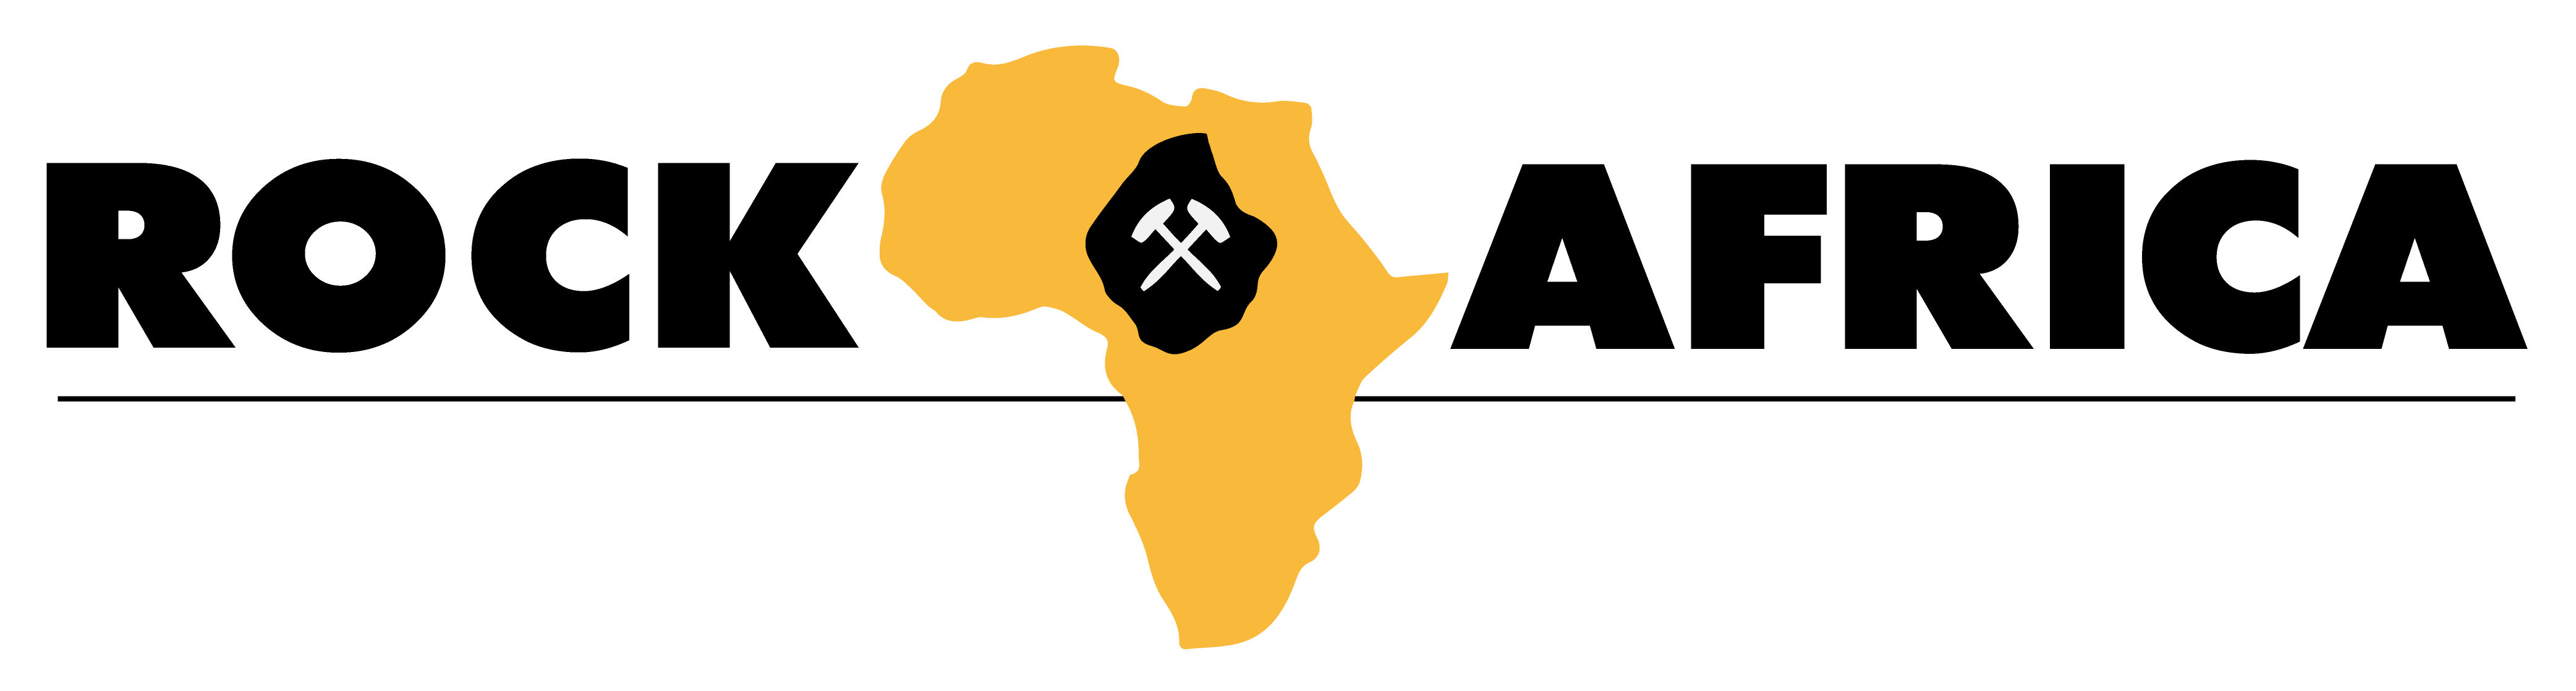 Rock Africa Main Site Logo